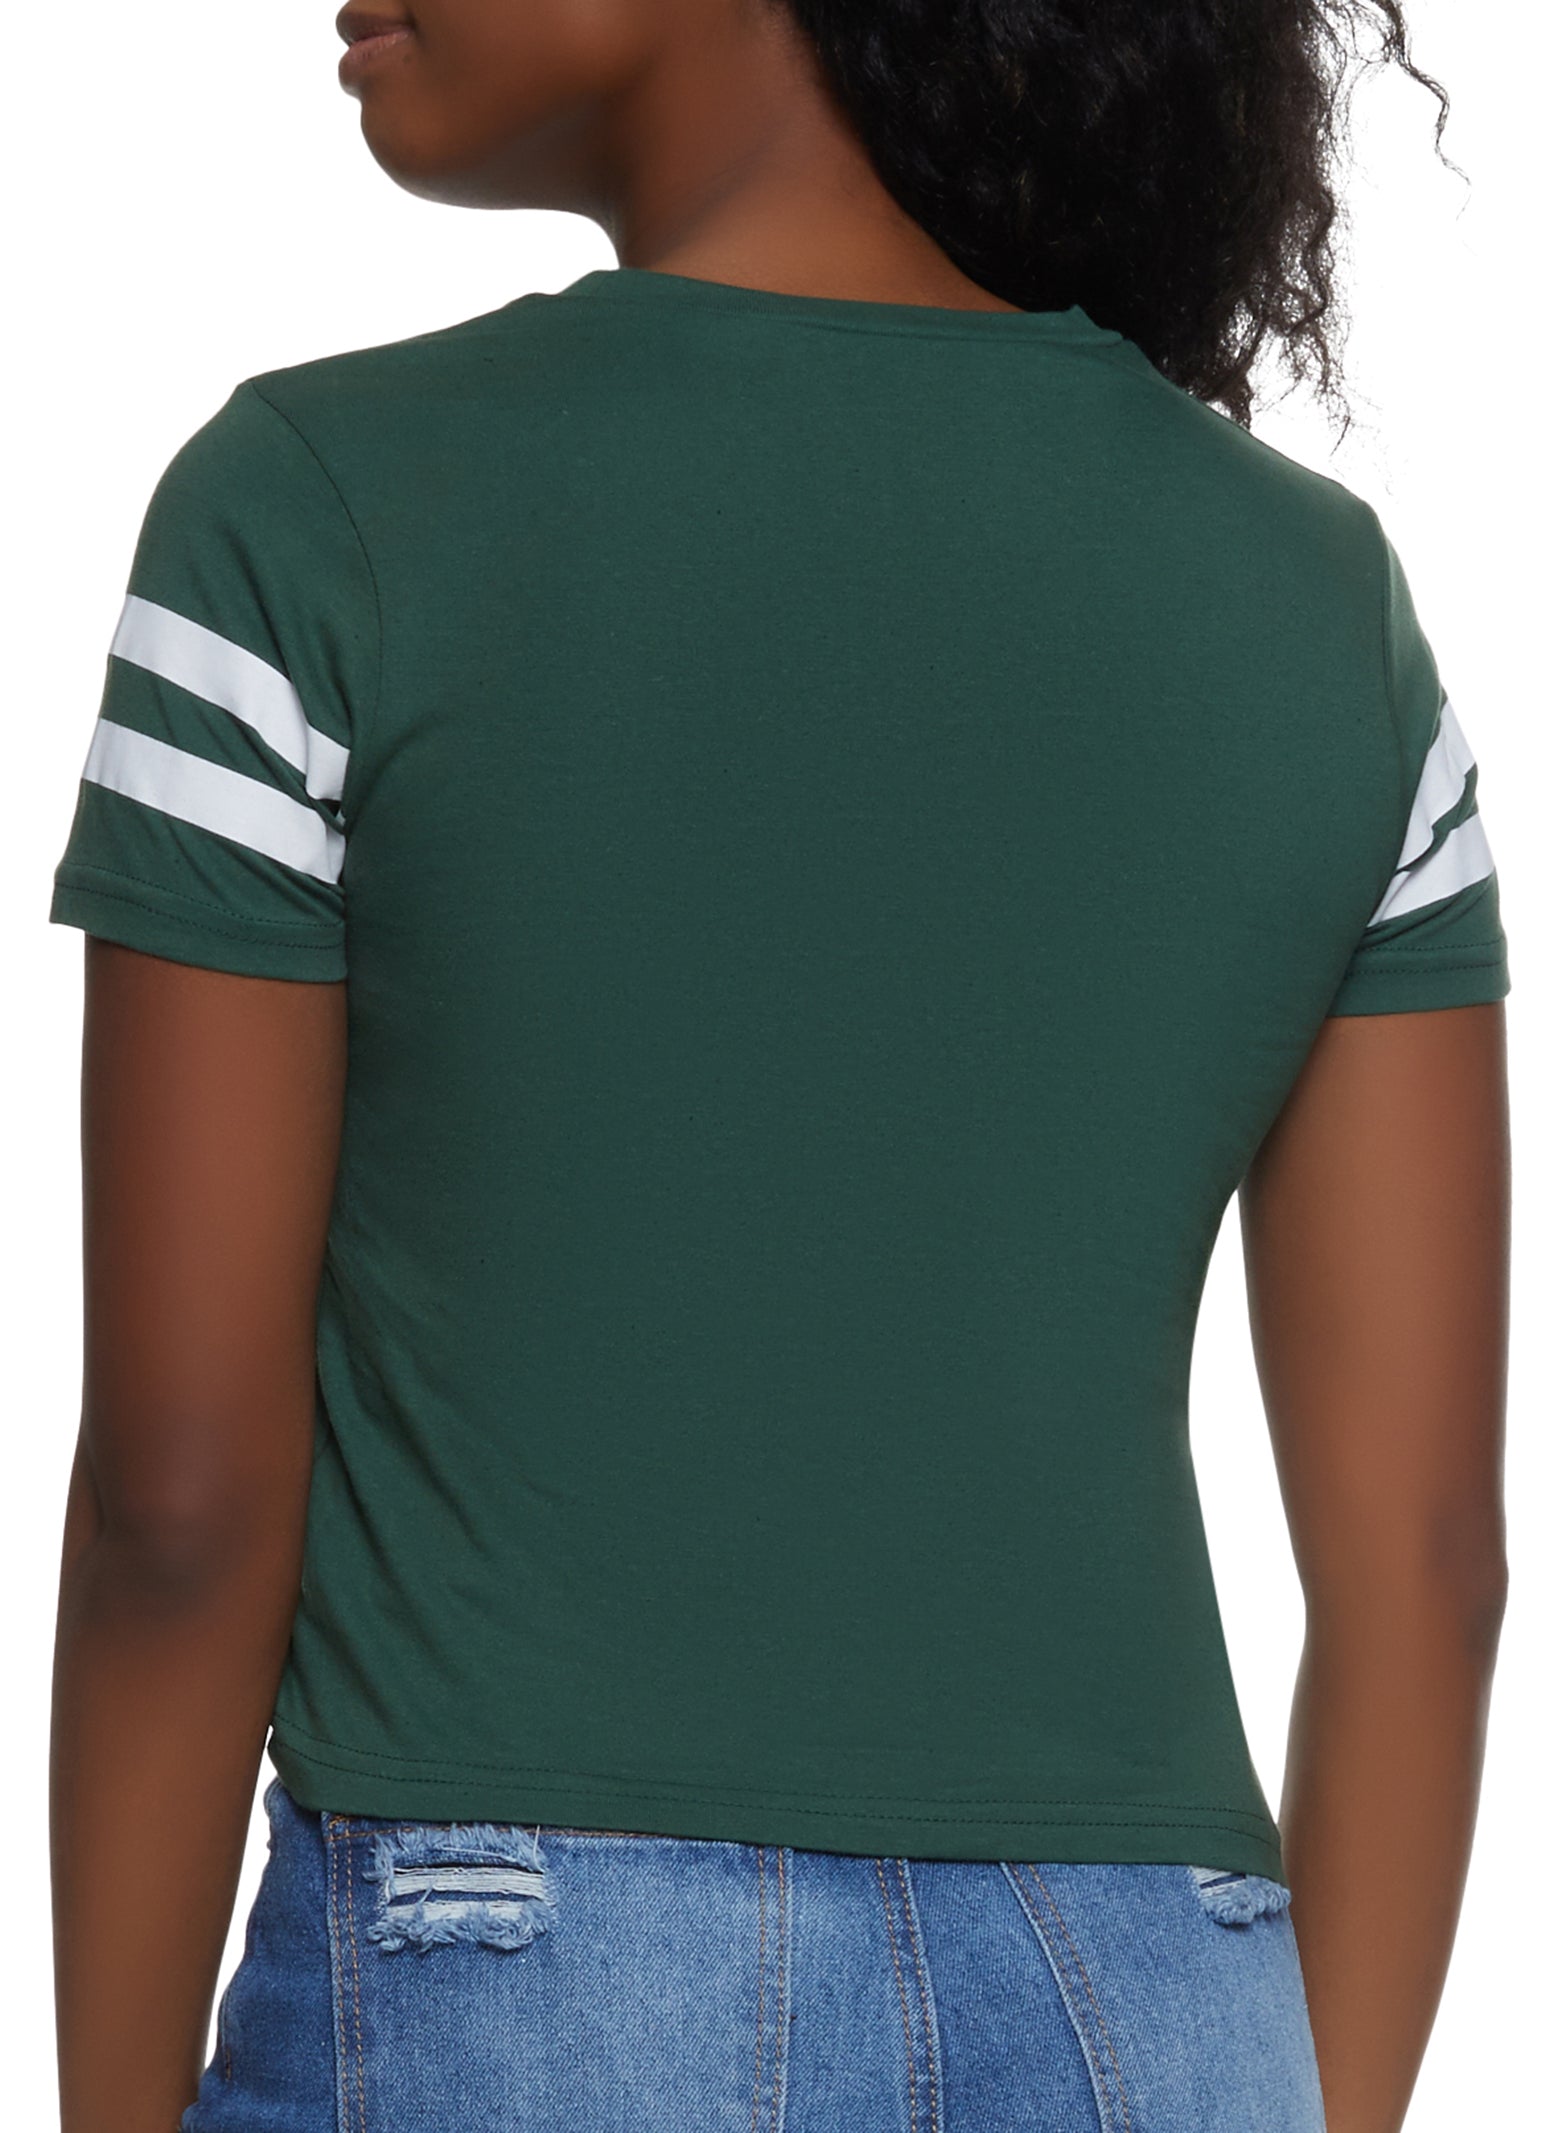 Womens Varsity Stripe Short Sleeve Tee, Green, Size M